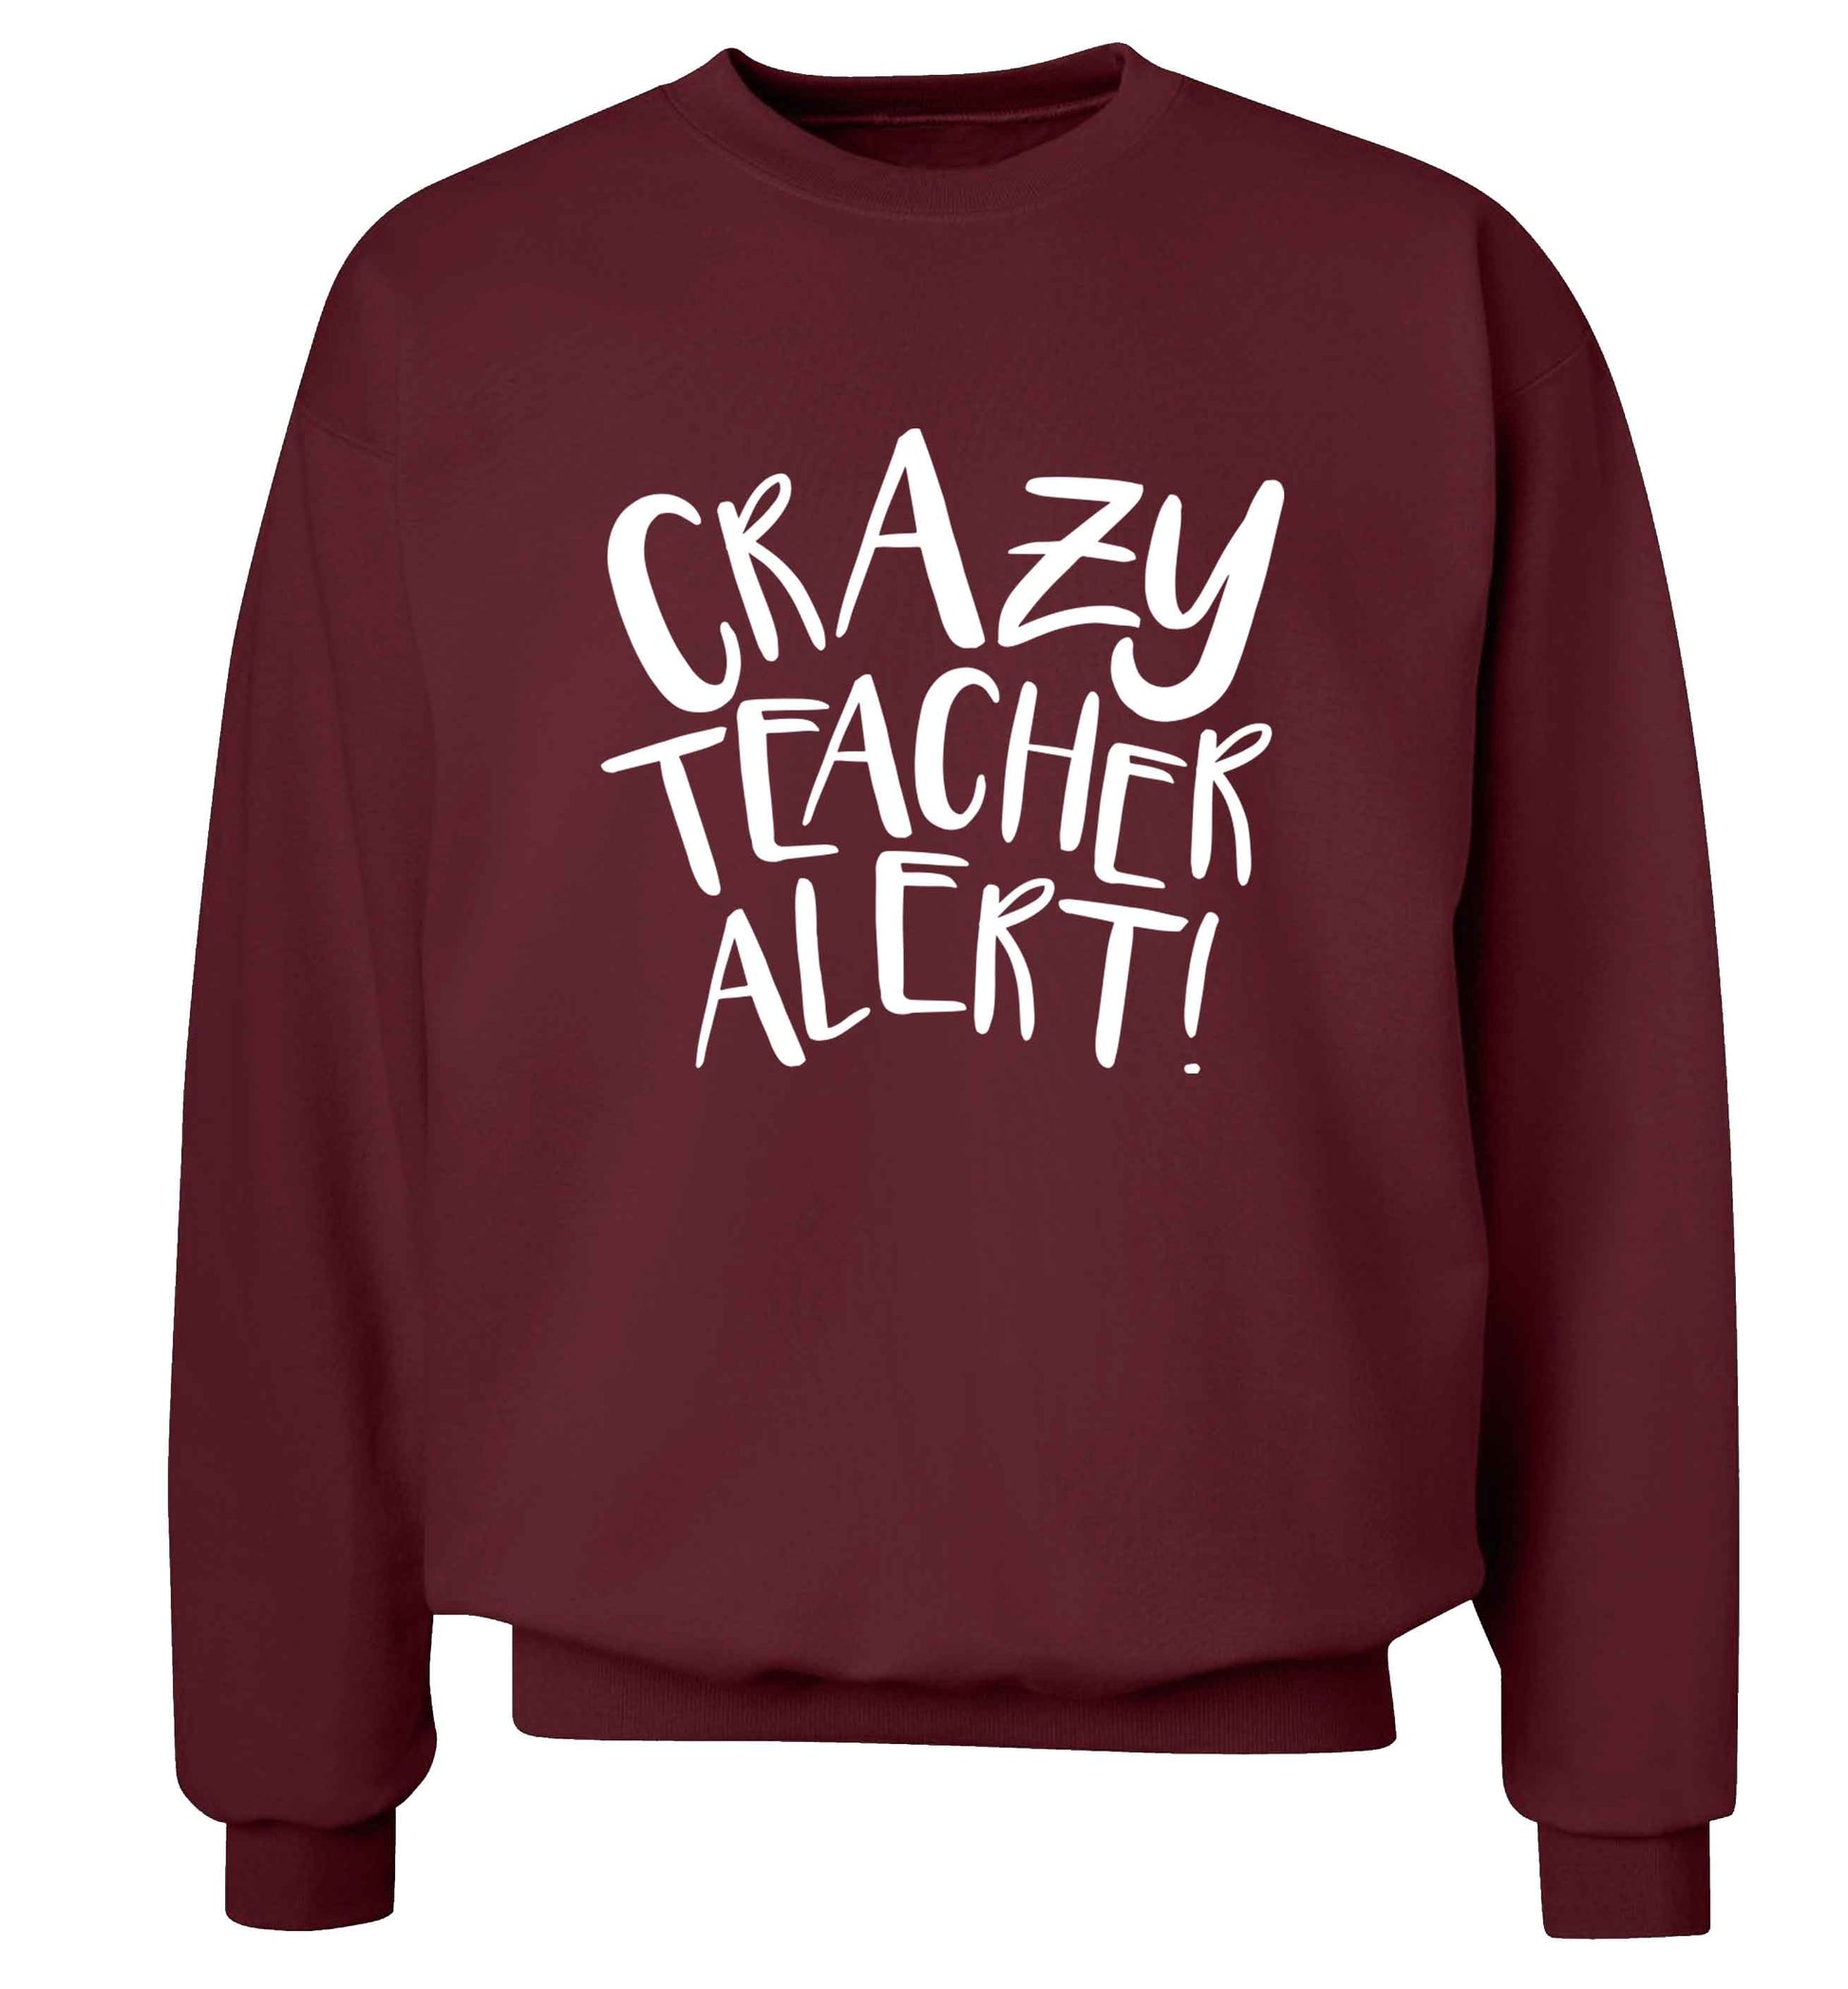 Crazy teacher alert adult's unisex maroon sweater 2XL